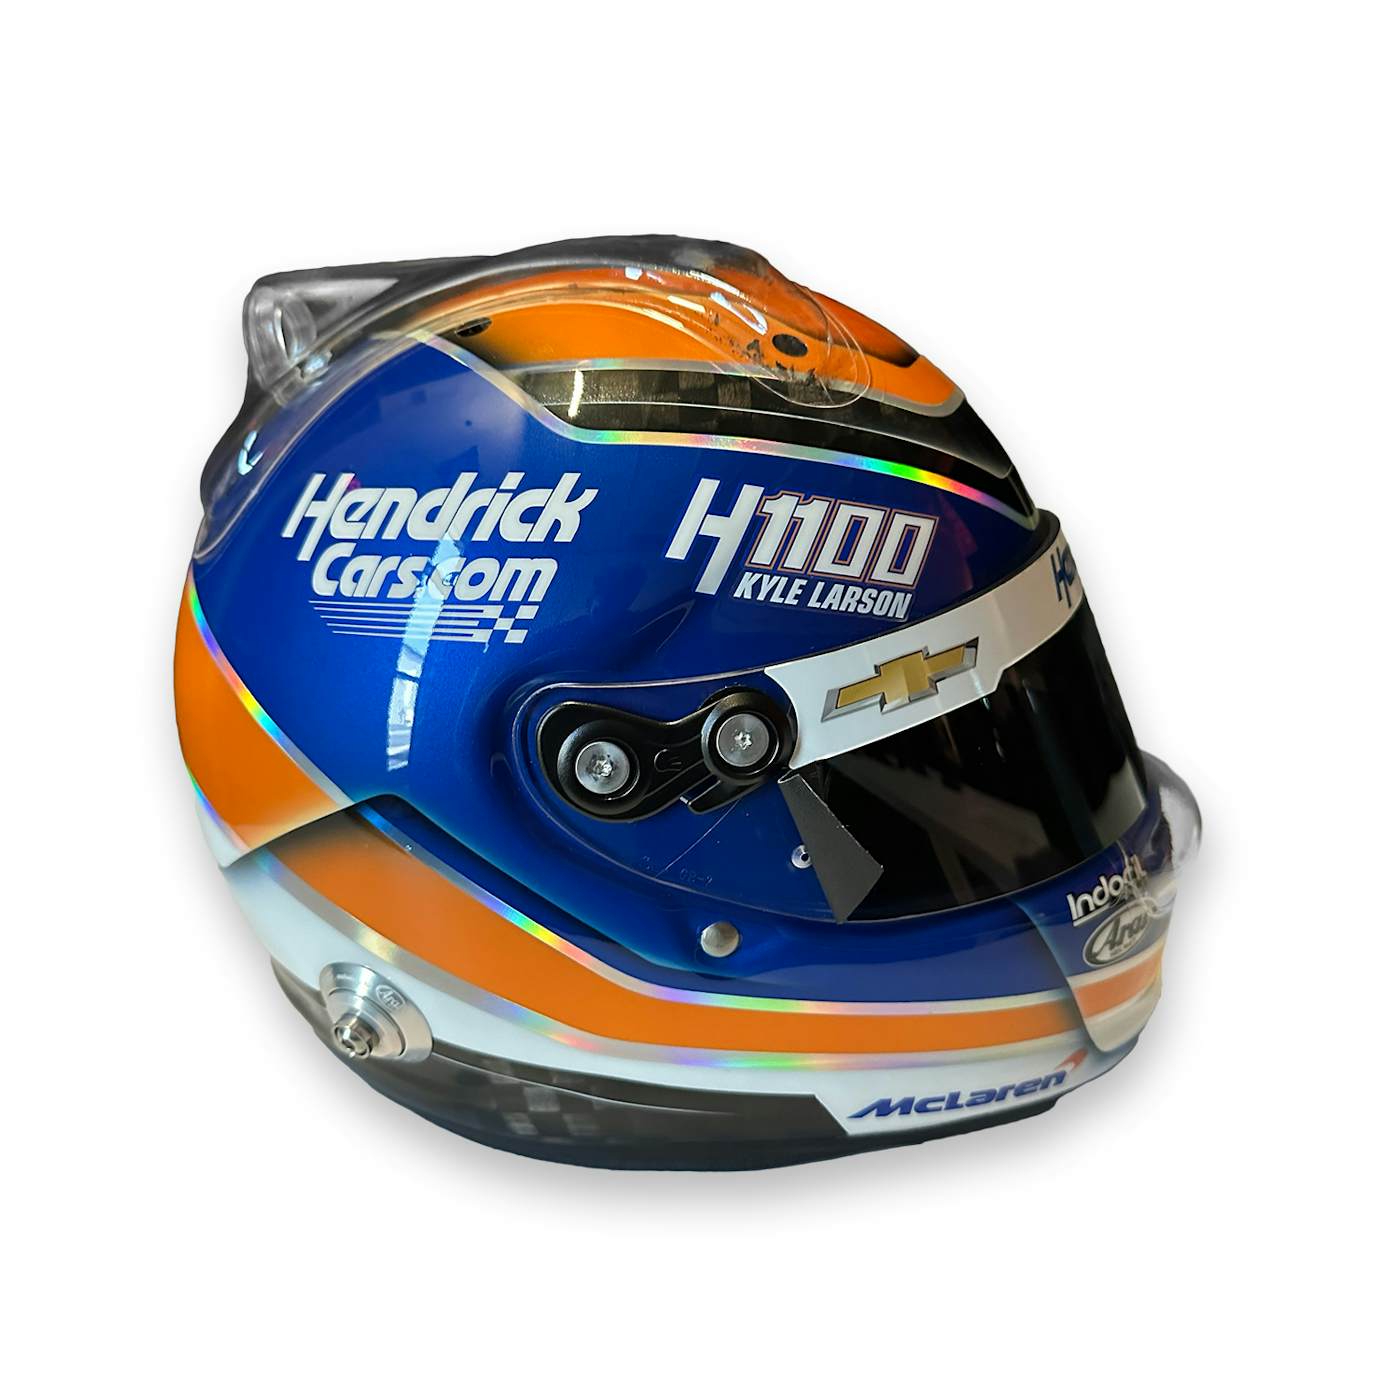 Hendrick Motorsports AUTOGRAPHED 2024 Kyle Larson Arrow McLaren HendrickCars.com H1100 Arai 1/5 Scale Mini Replica Helmet